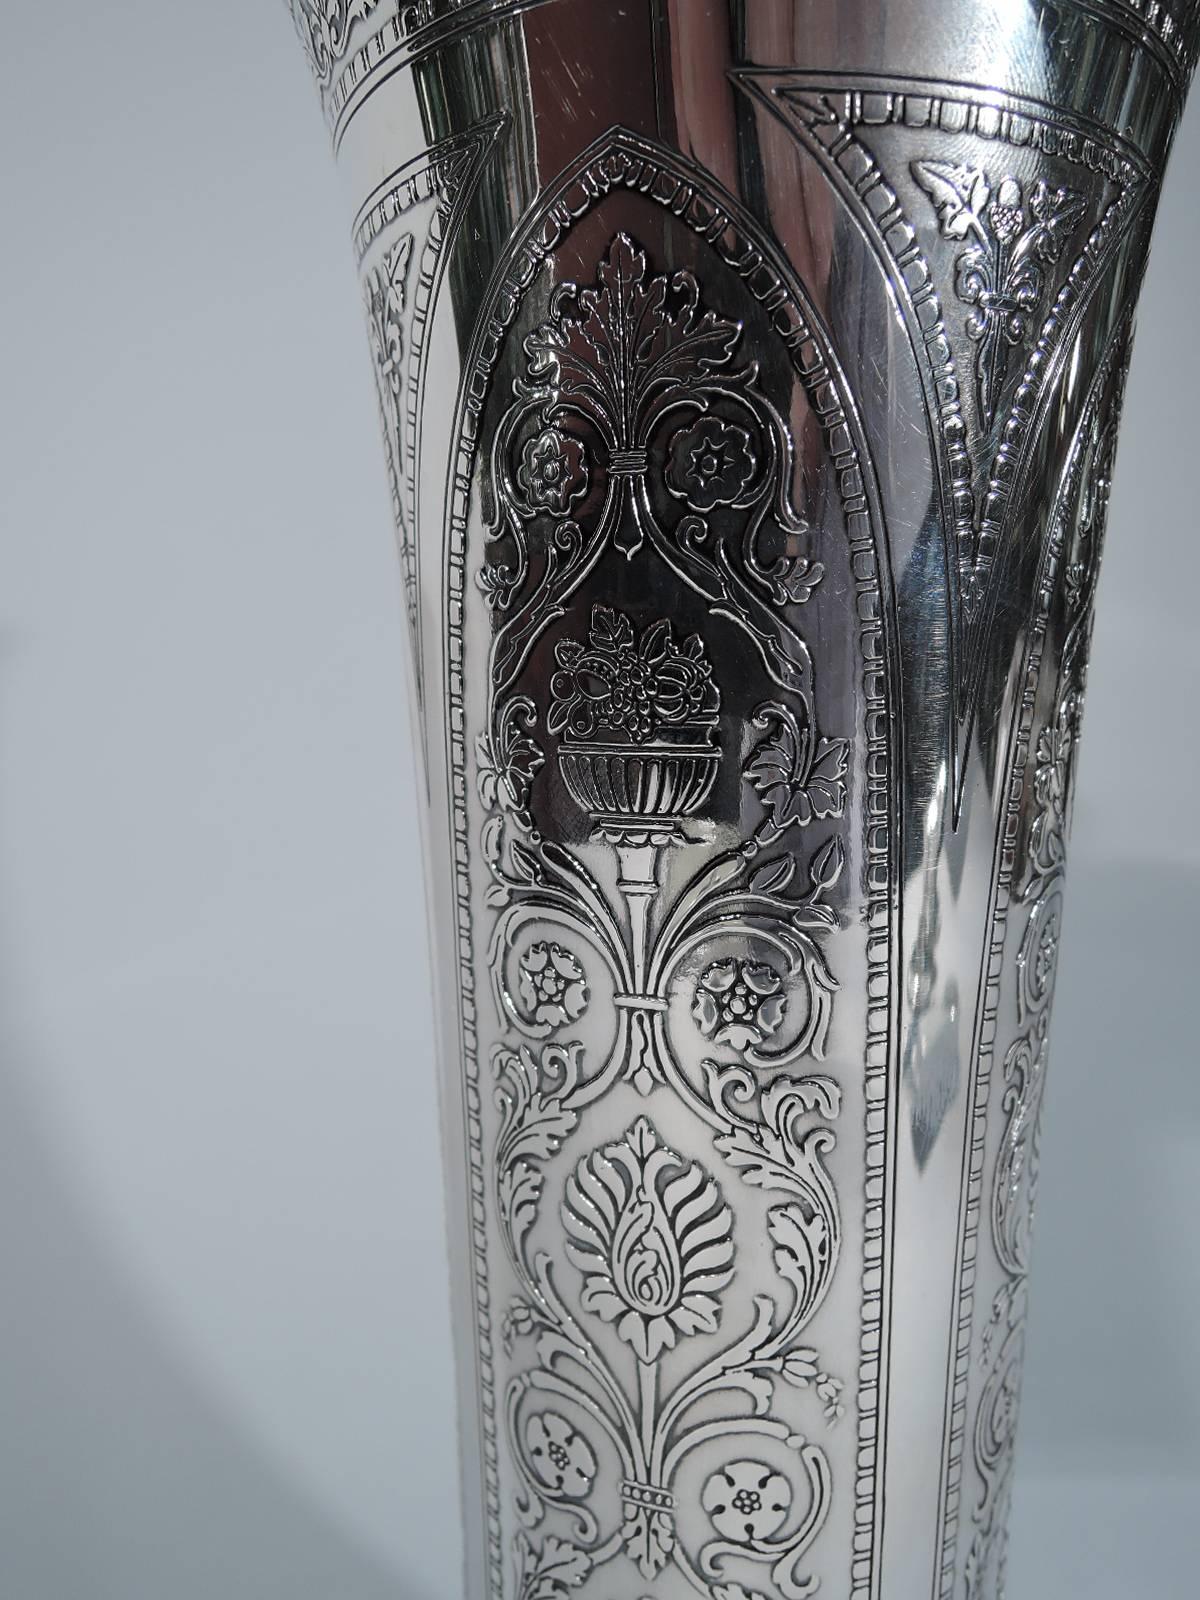 American Distinctive Edwardian Sterling Silver Vase by Tiffany & Co.